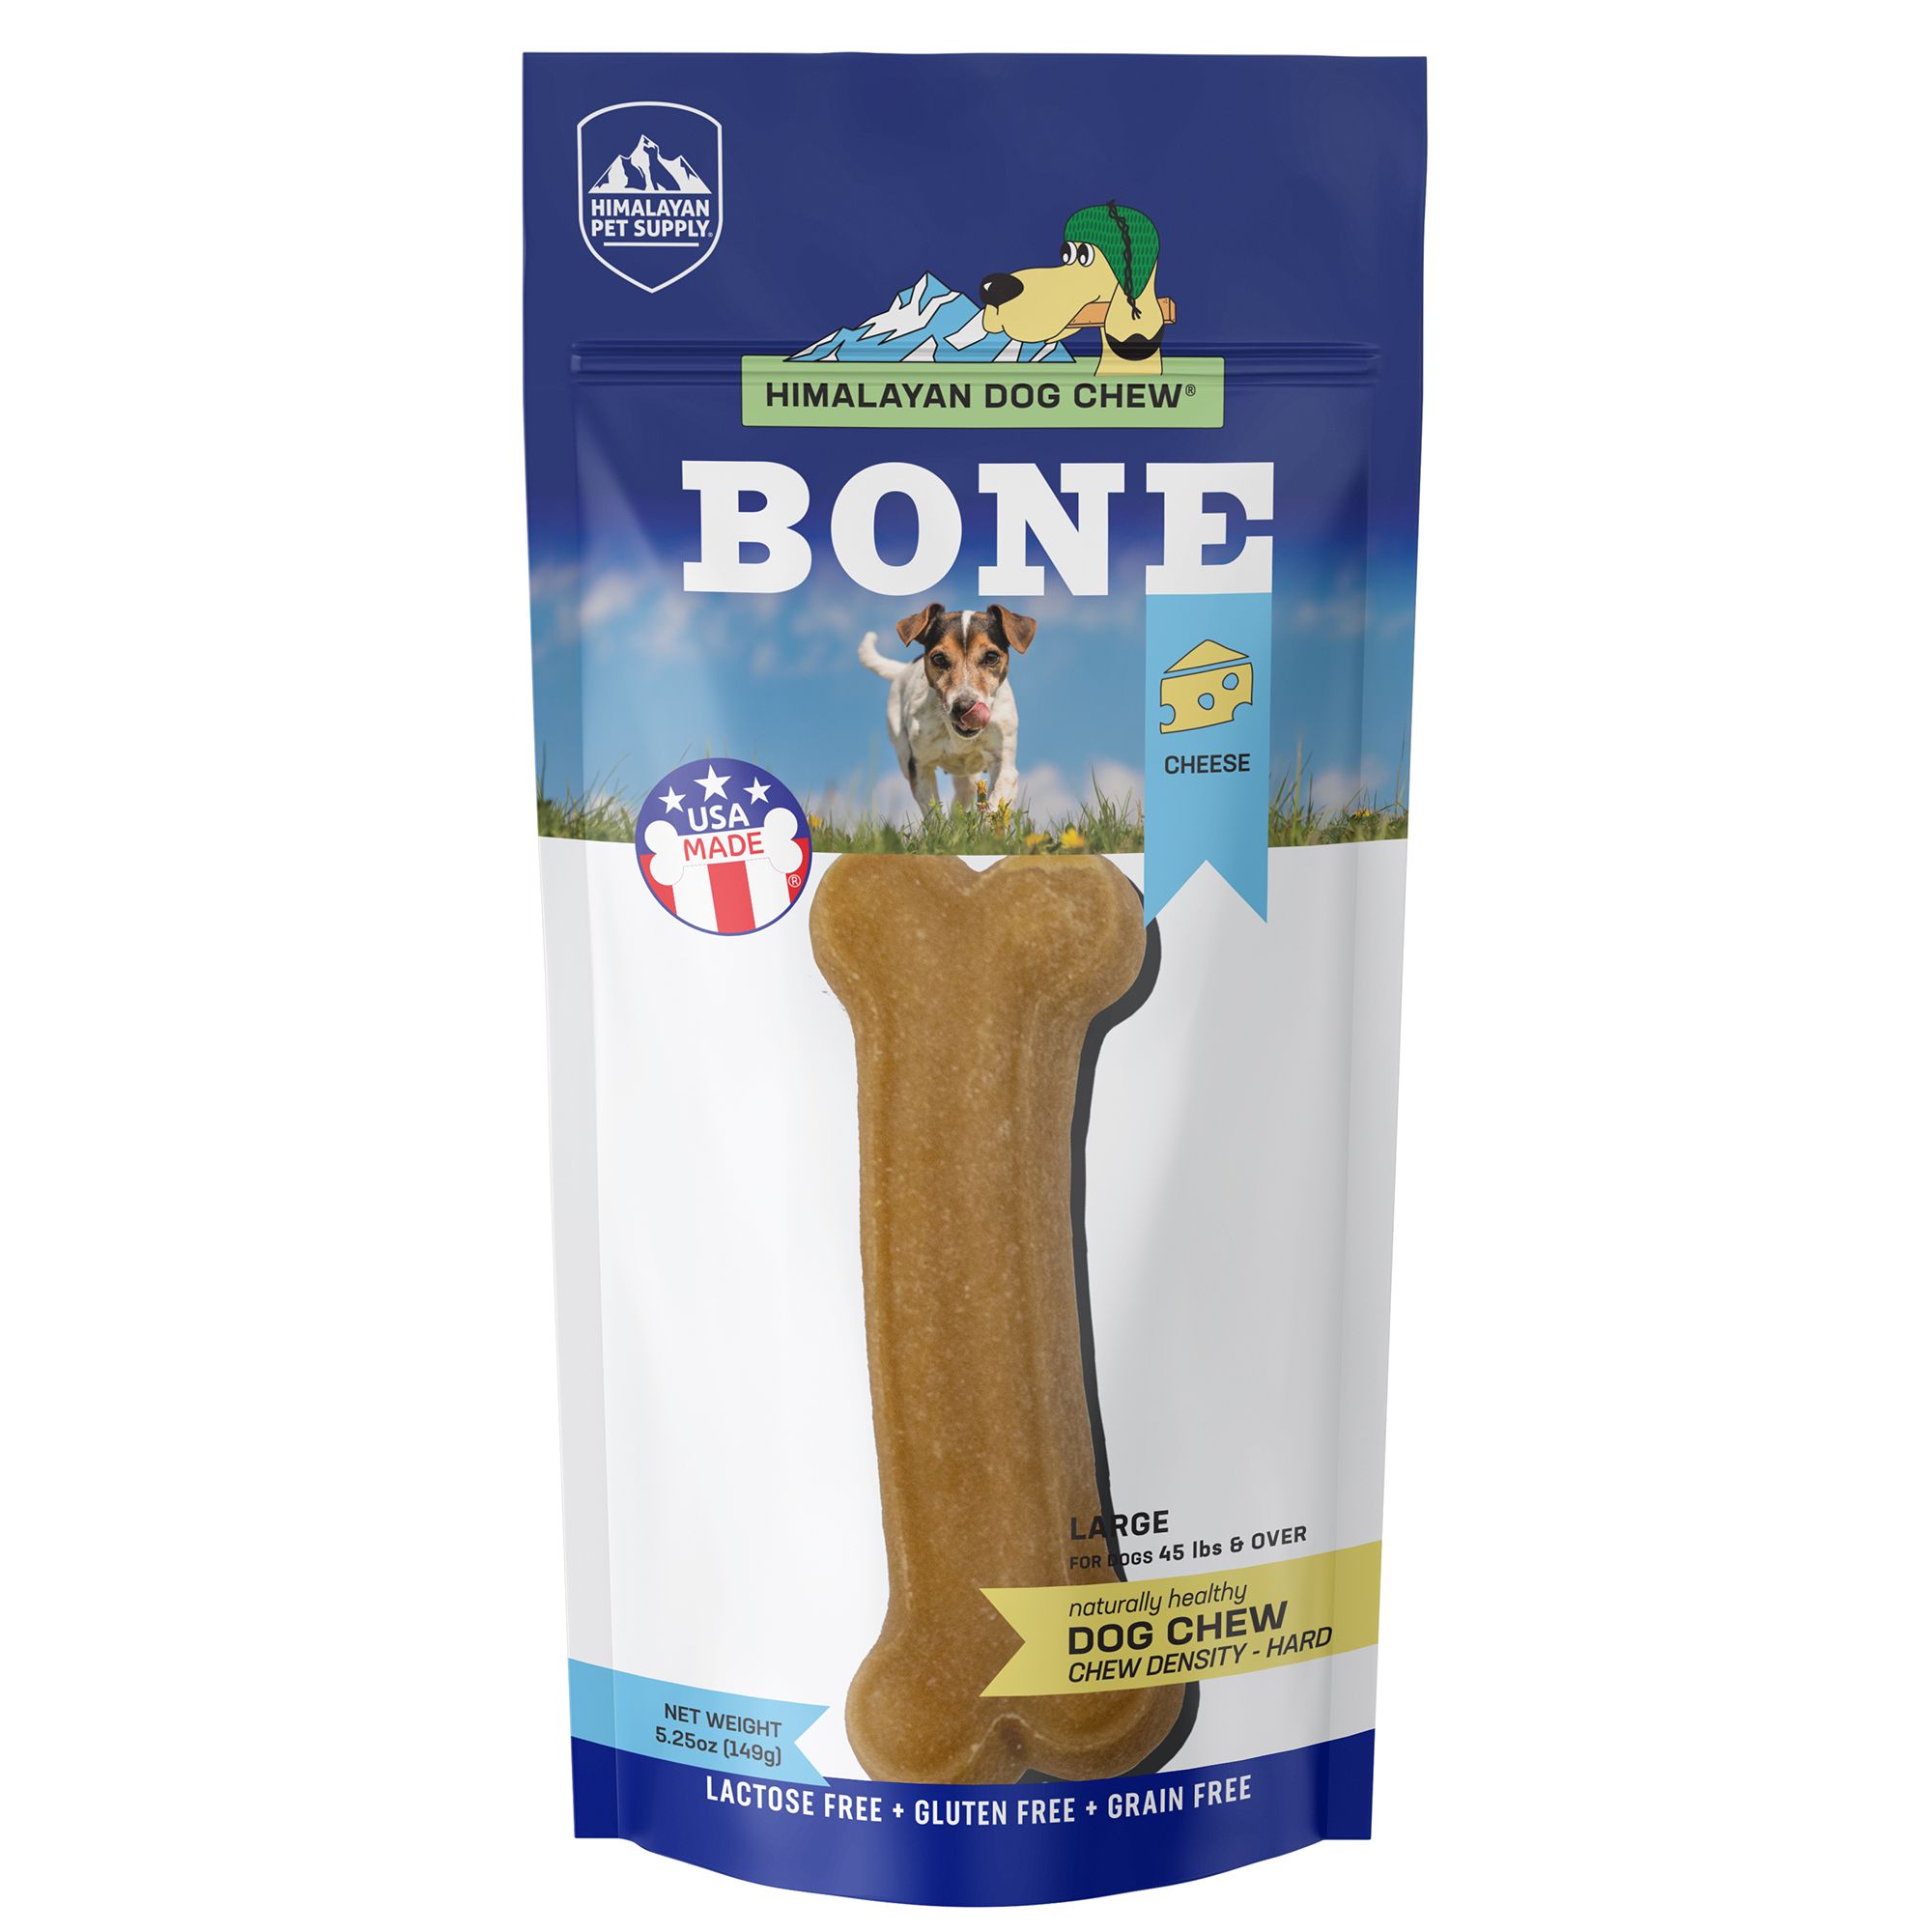 healthy dog bones to chew on